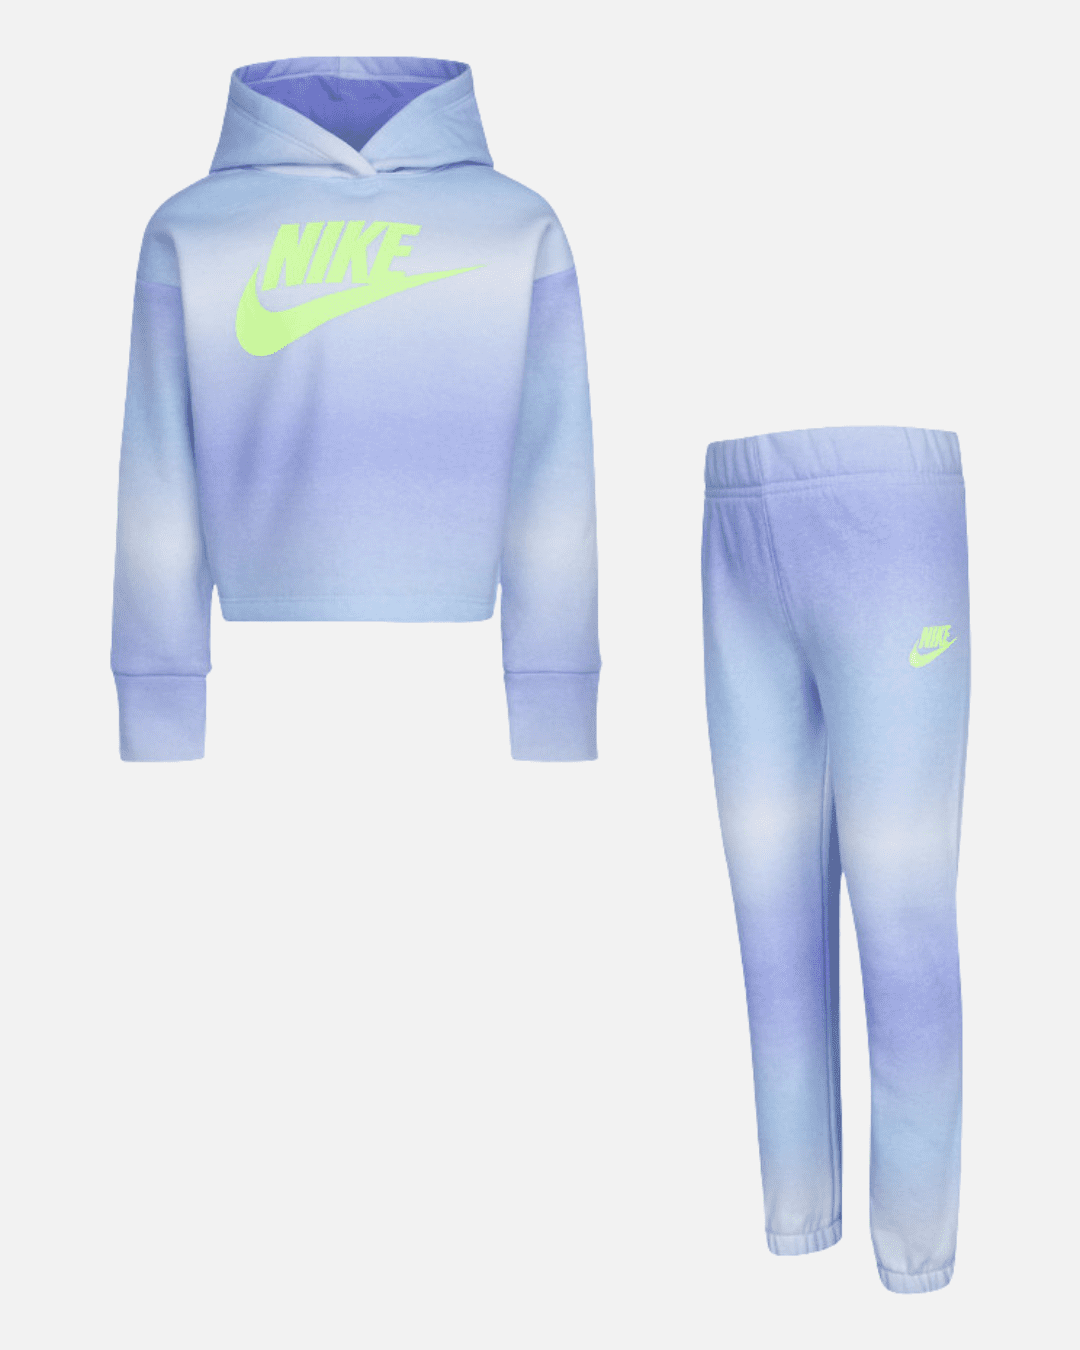 Nike Bedrucktes Club-Fleece-Trainingsanzug-Set für Kinder – Blau/Grün